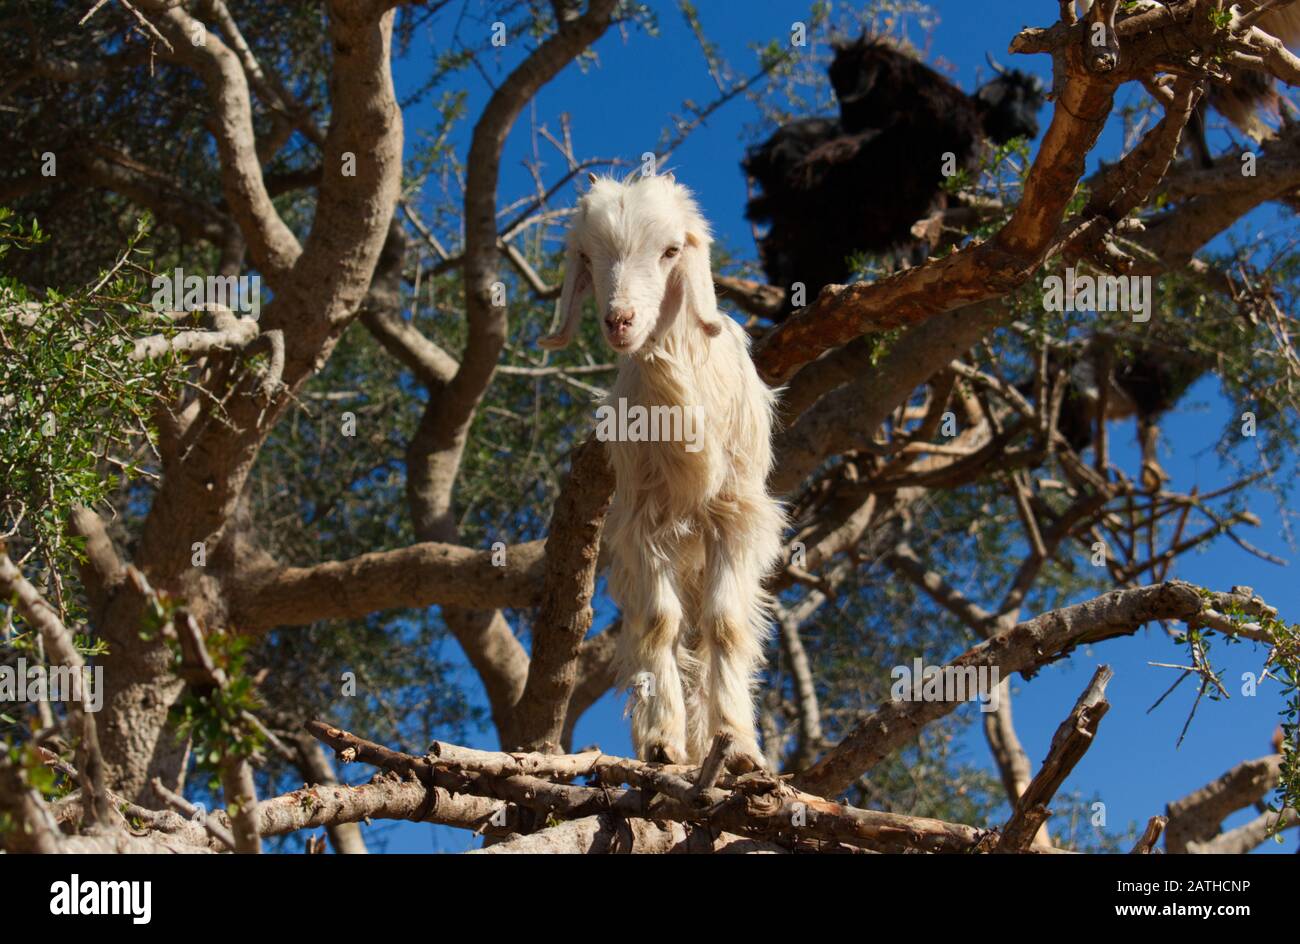 Un des célèbres chèvres d'escalade d'arbres du Maroc debout sur la branche d'un arbre d'Argan Banque D'Images